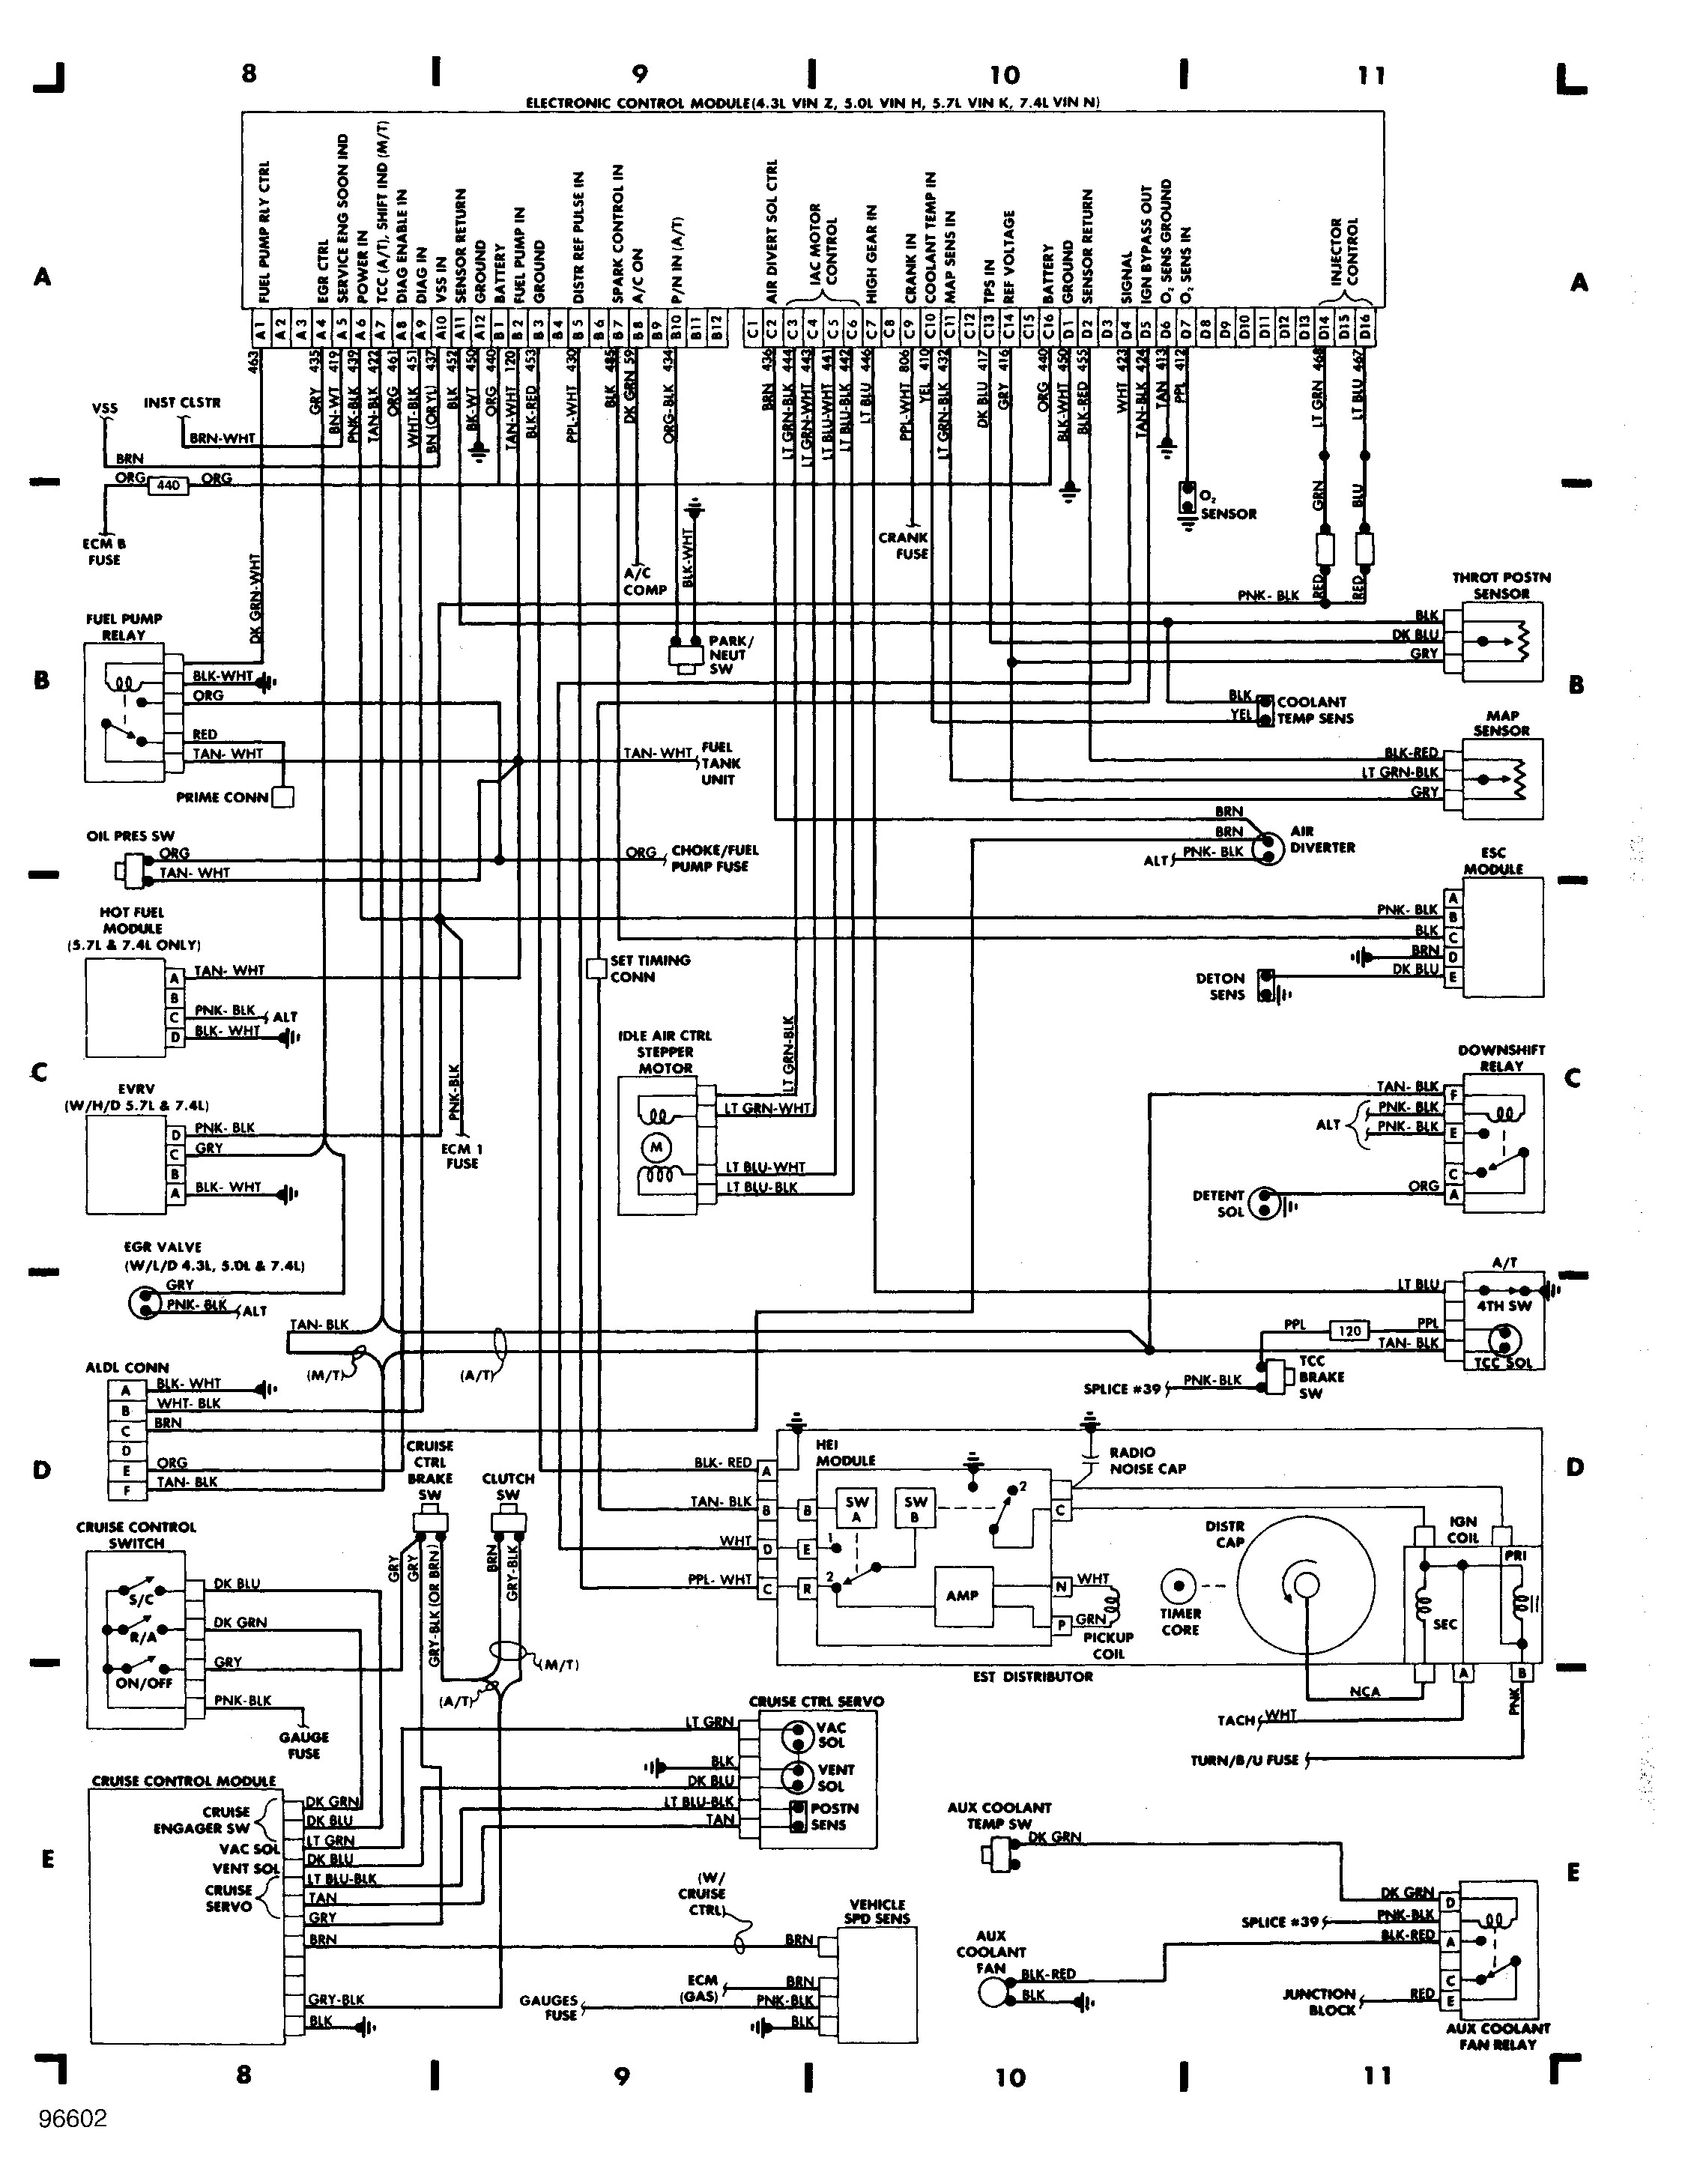 Chevy Trailblazer Engine Diagram Wiring Diagram A 1999 Suburban 5 7 Engine Wiring Diagram Used Of Chevy Trailblazer Engine Diagram